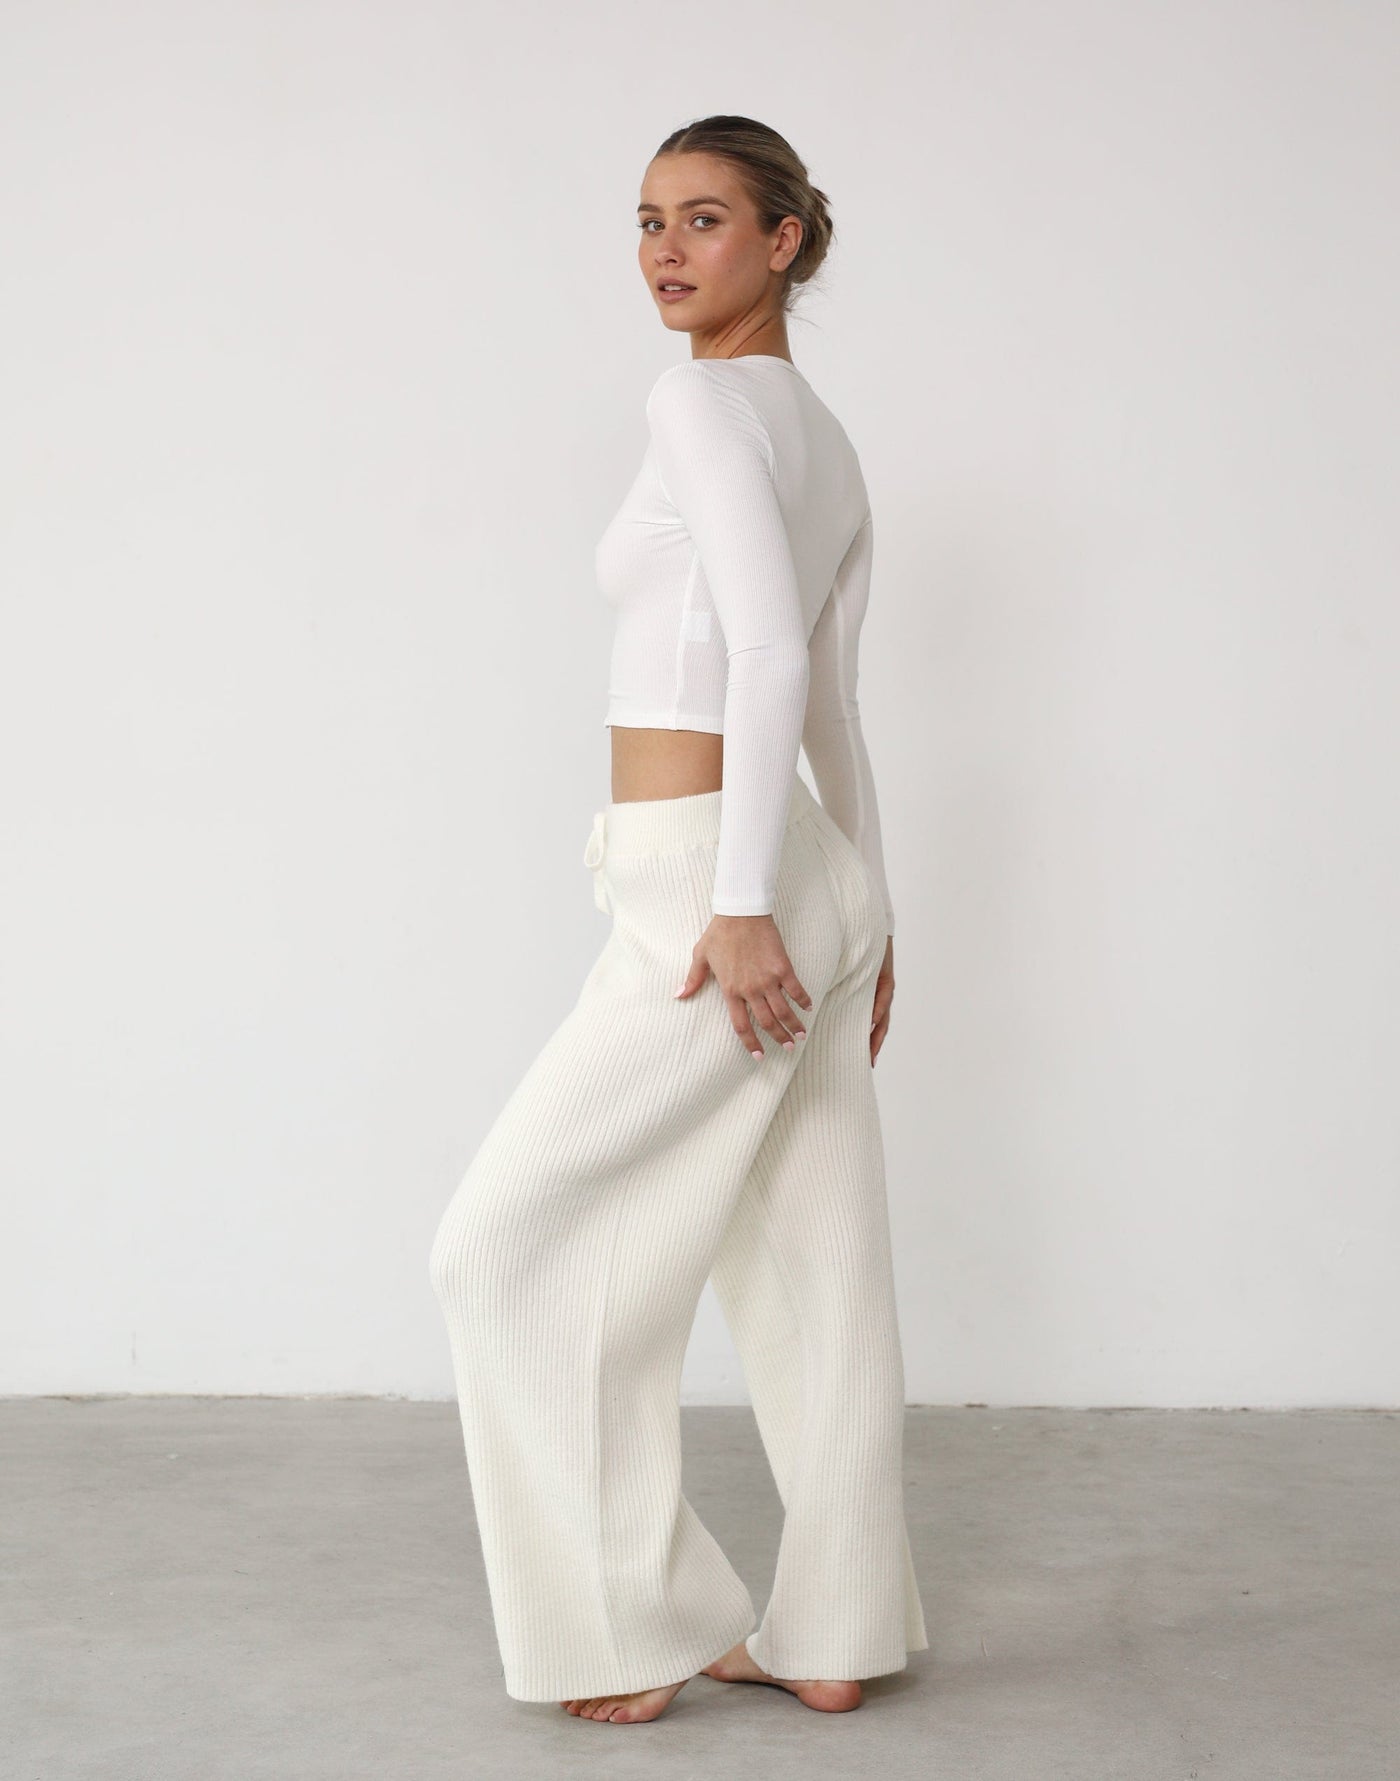 Tavinia Knit Pants (White) - Ribbed High Waisted Wide Leg Knit Pant - Women's Pants - Charcoal Clothing